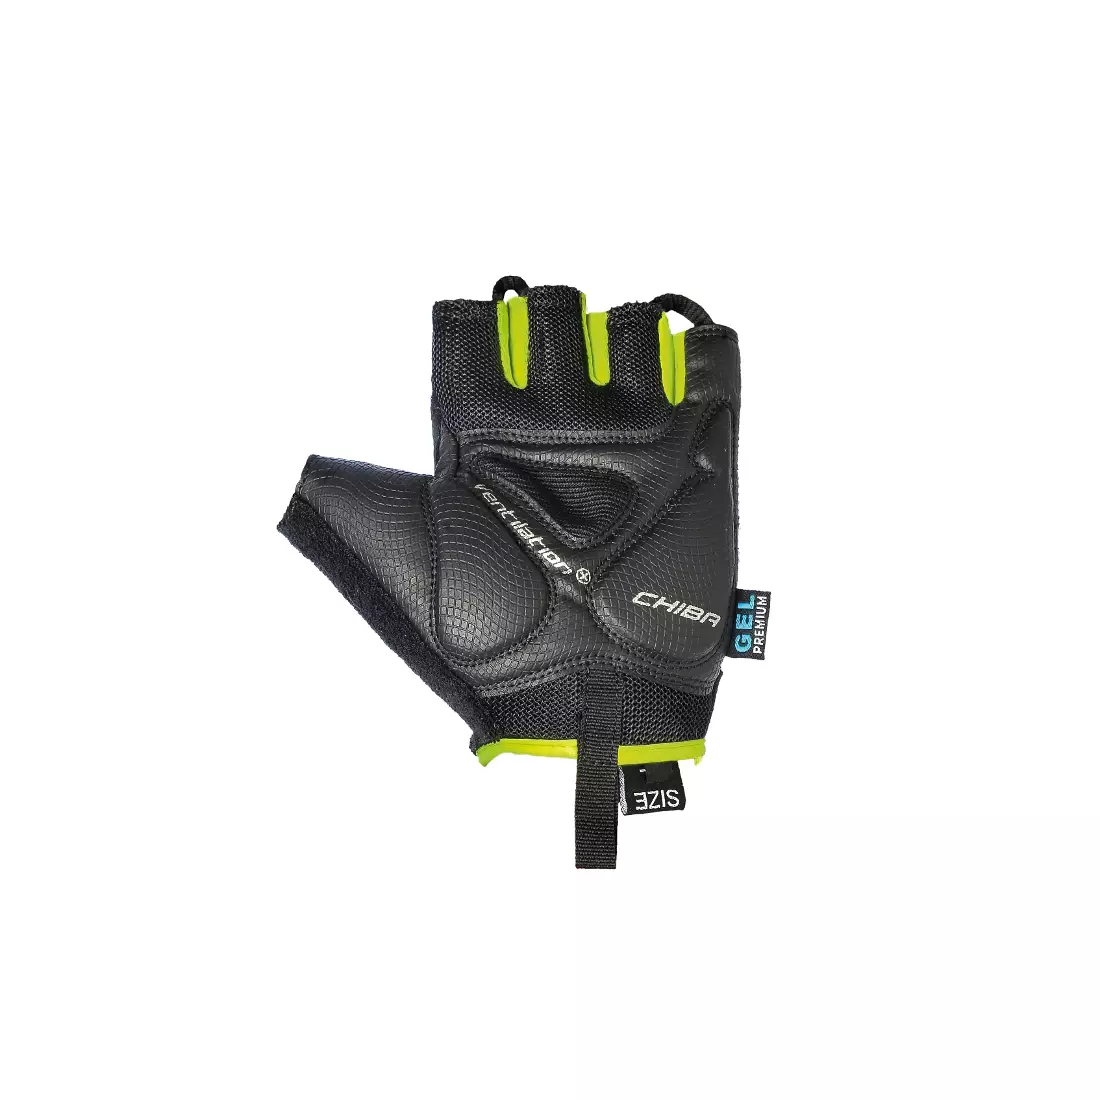 CHIBA AIR PLUS cyklistické rukavice, černo-fluor 30145